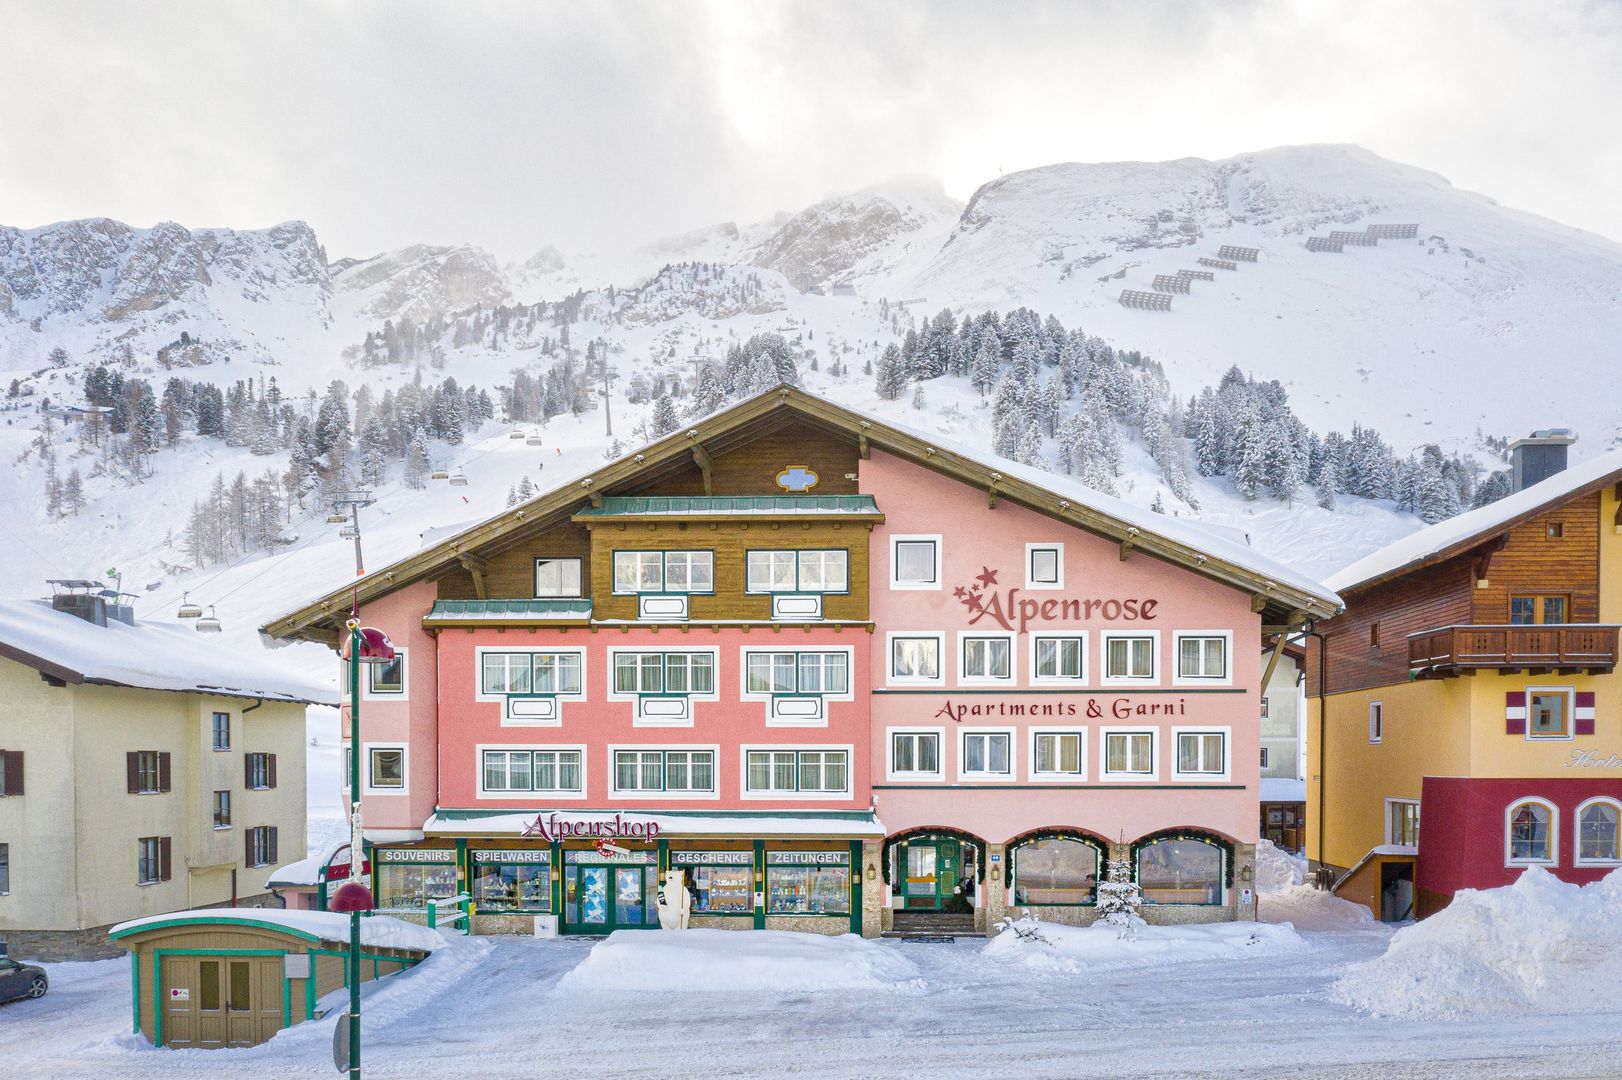 Meer info over Apartments & Garni Alpenrose  bij Wintertrex